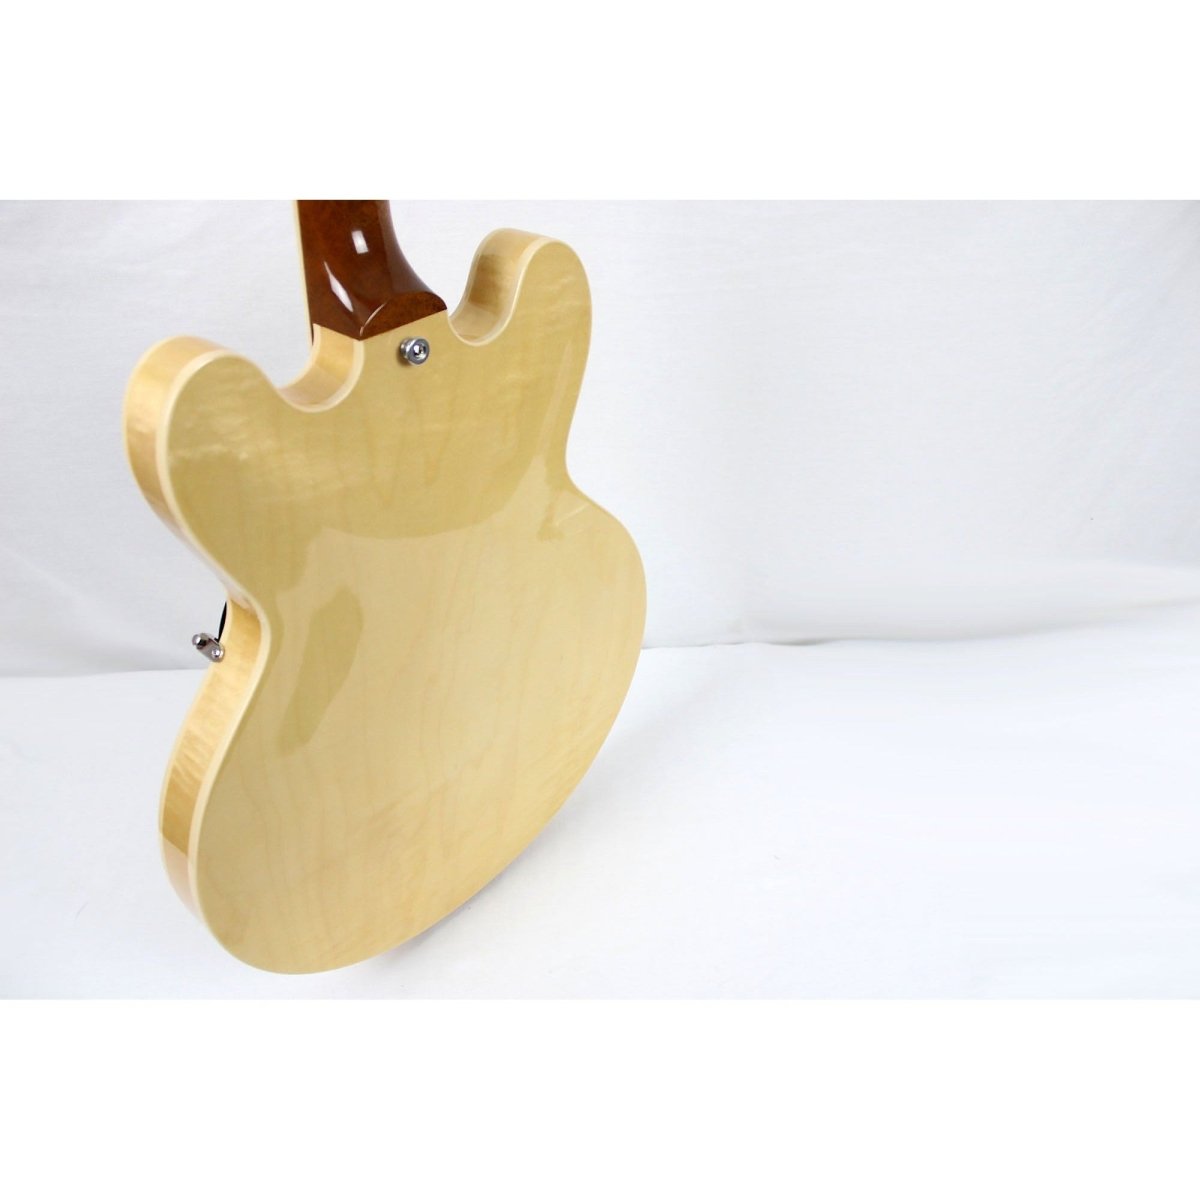 Gibson ES-335 Figured - Antique Natural - Leitz Music-711106034133-ES35F00ANNH1